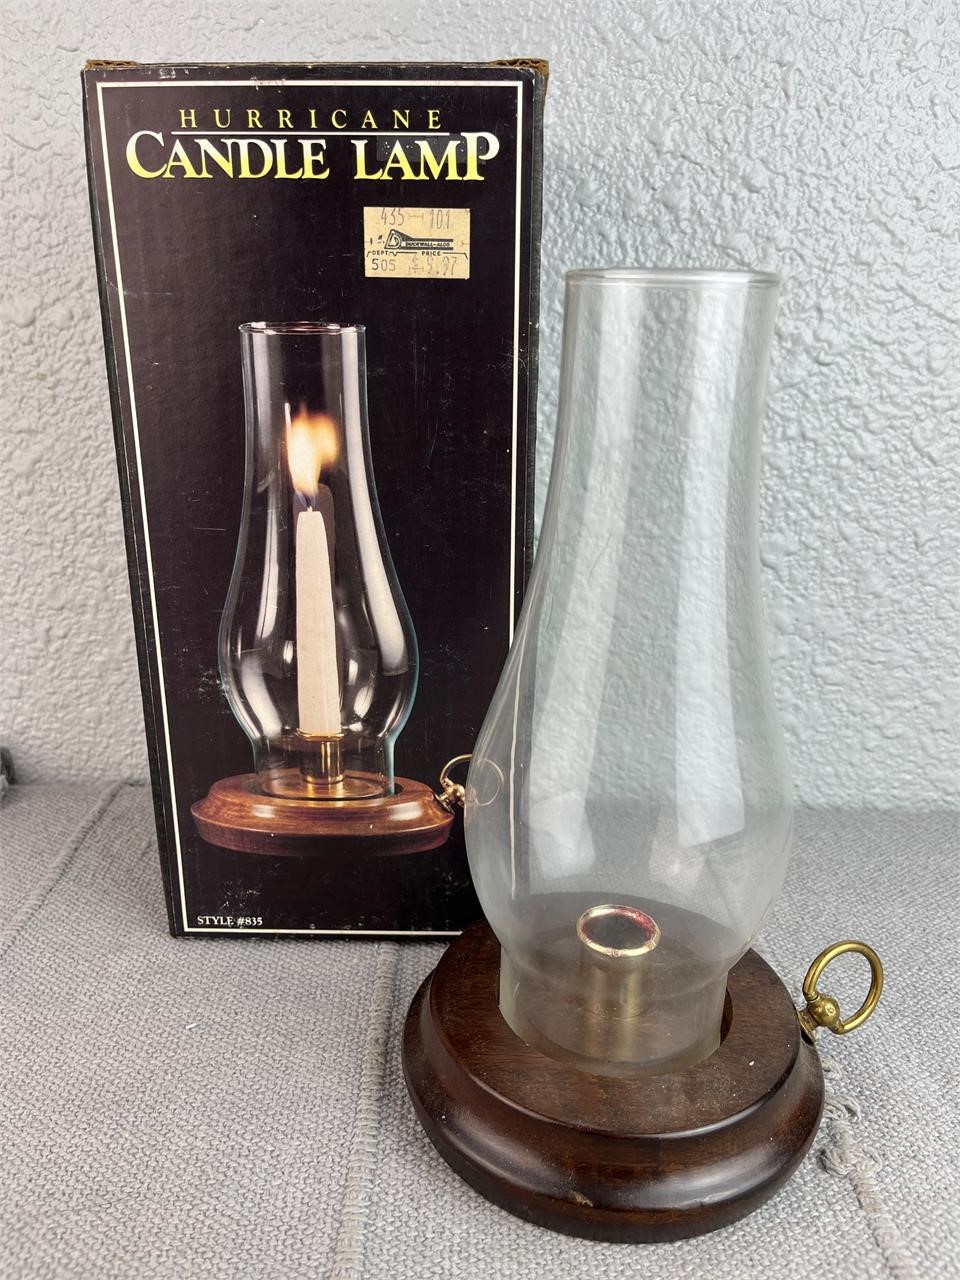 Vintage Hurricane Candle Lamp in Original Box